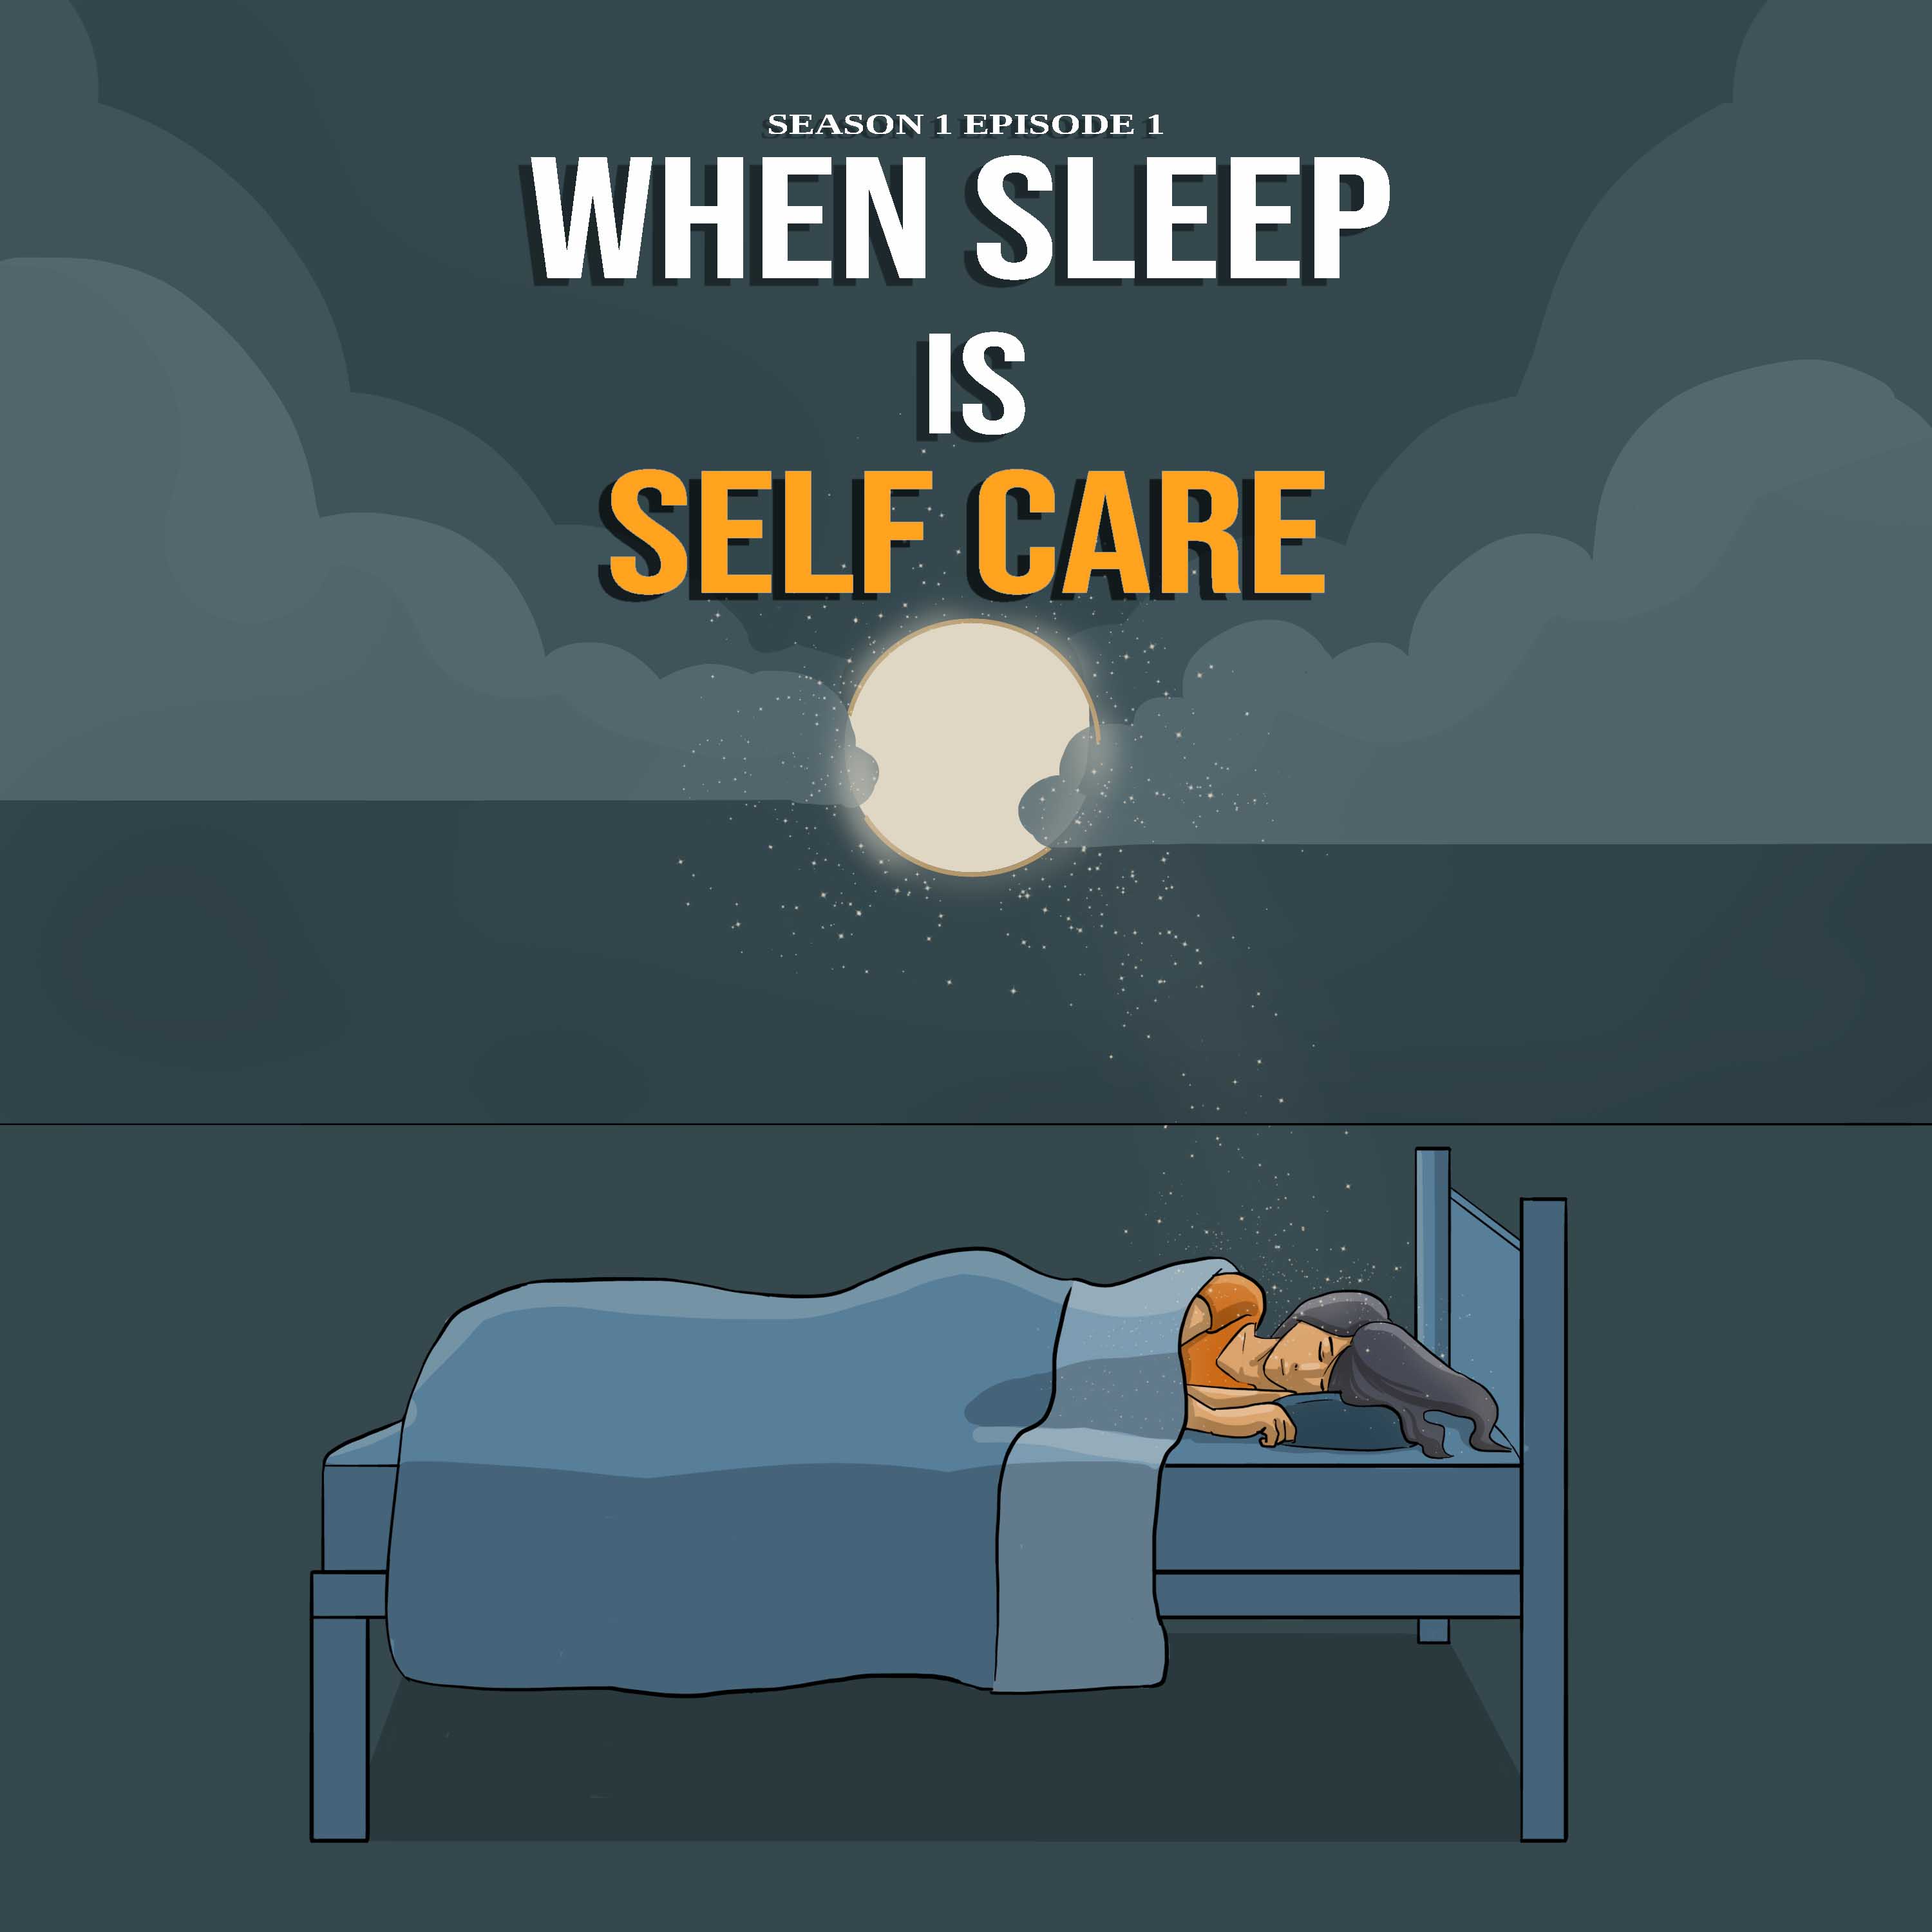 S1 Ep 1. When Sleep Is Self-Care